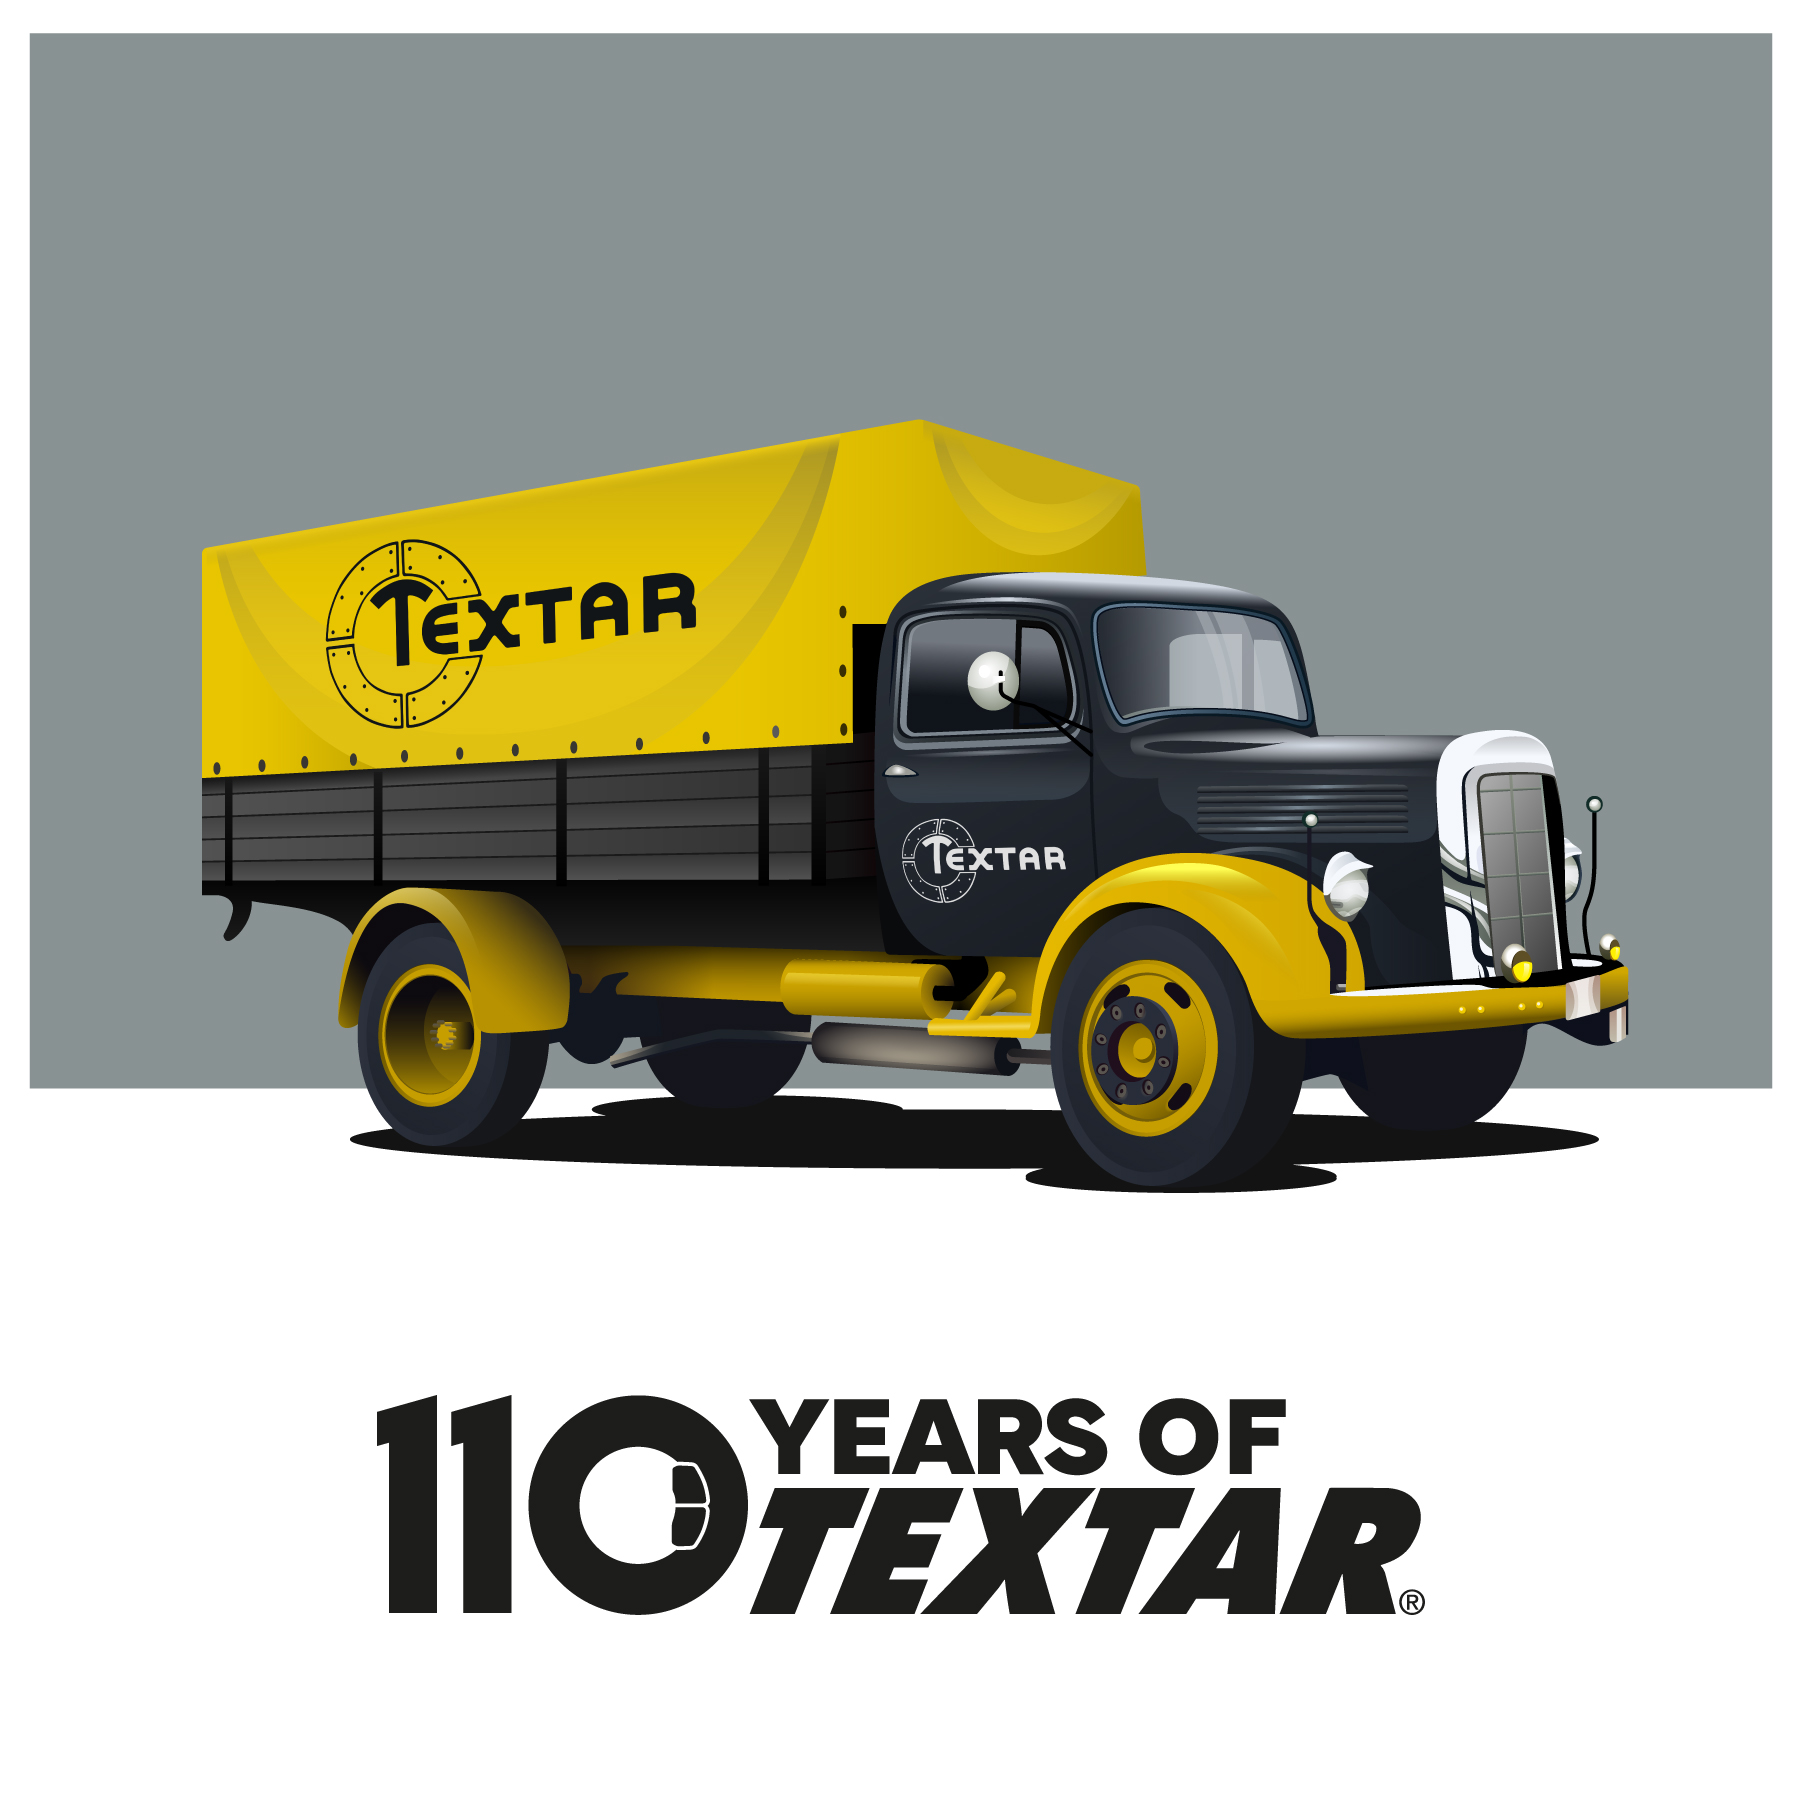 Textar marks 110 years of braking business